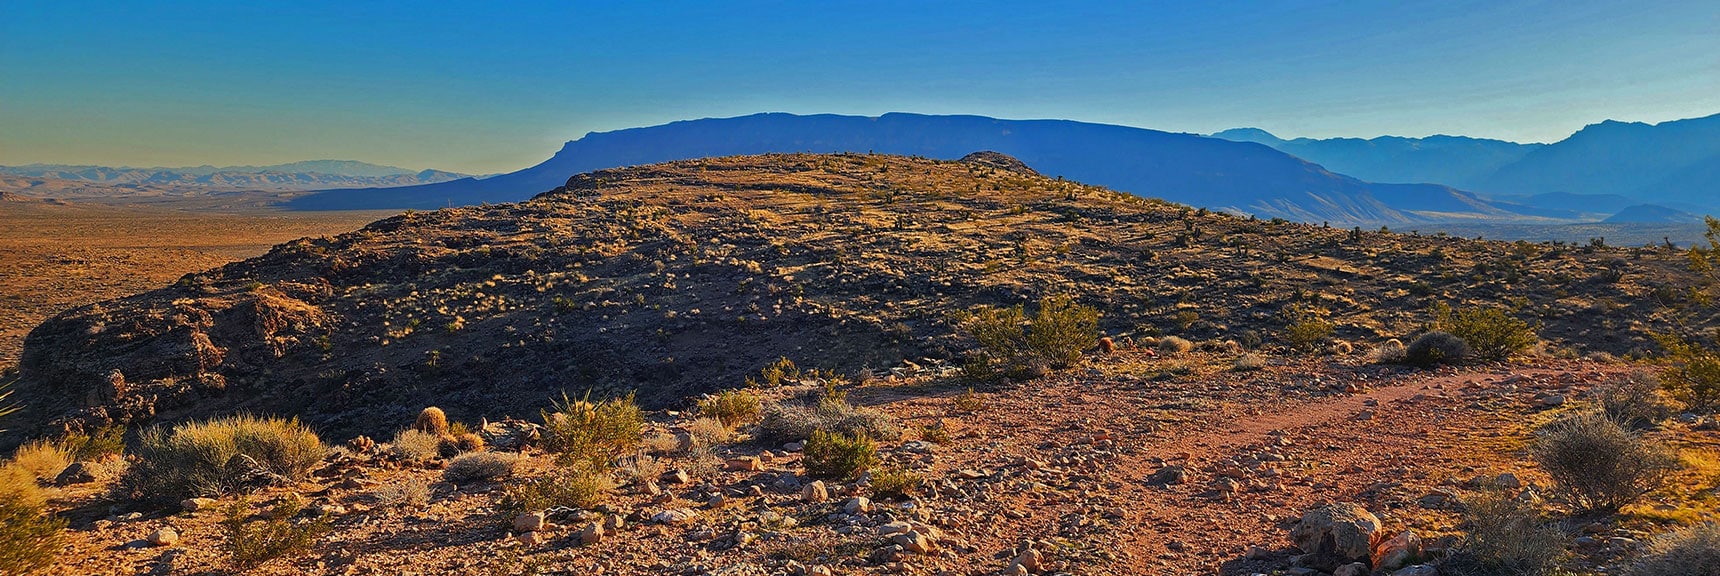 Peak 3844 Trail Toward Peak 3844 Ahead. | Brownstone Trail | Calico Basin | Brownstone Basin | La Madre Mountains Wilderness, Nevada